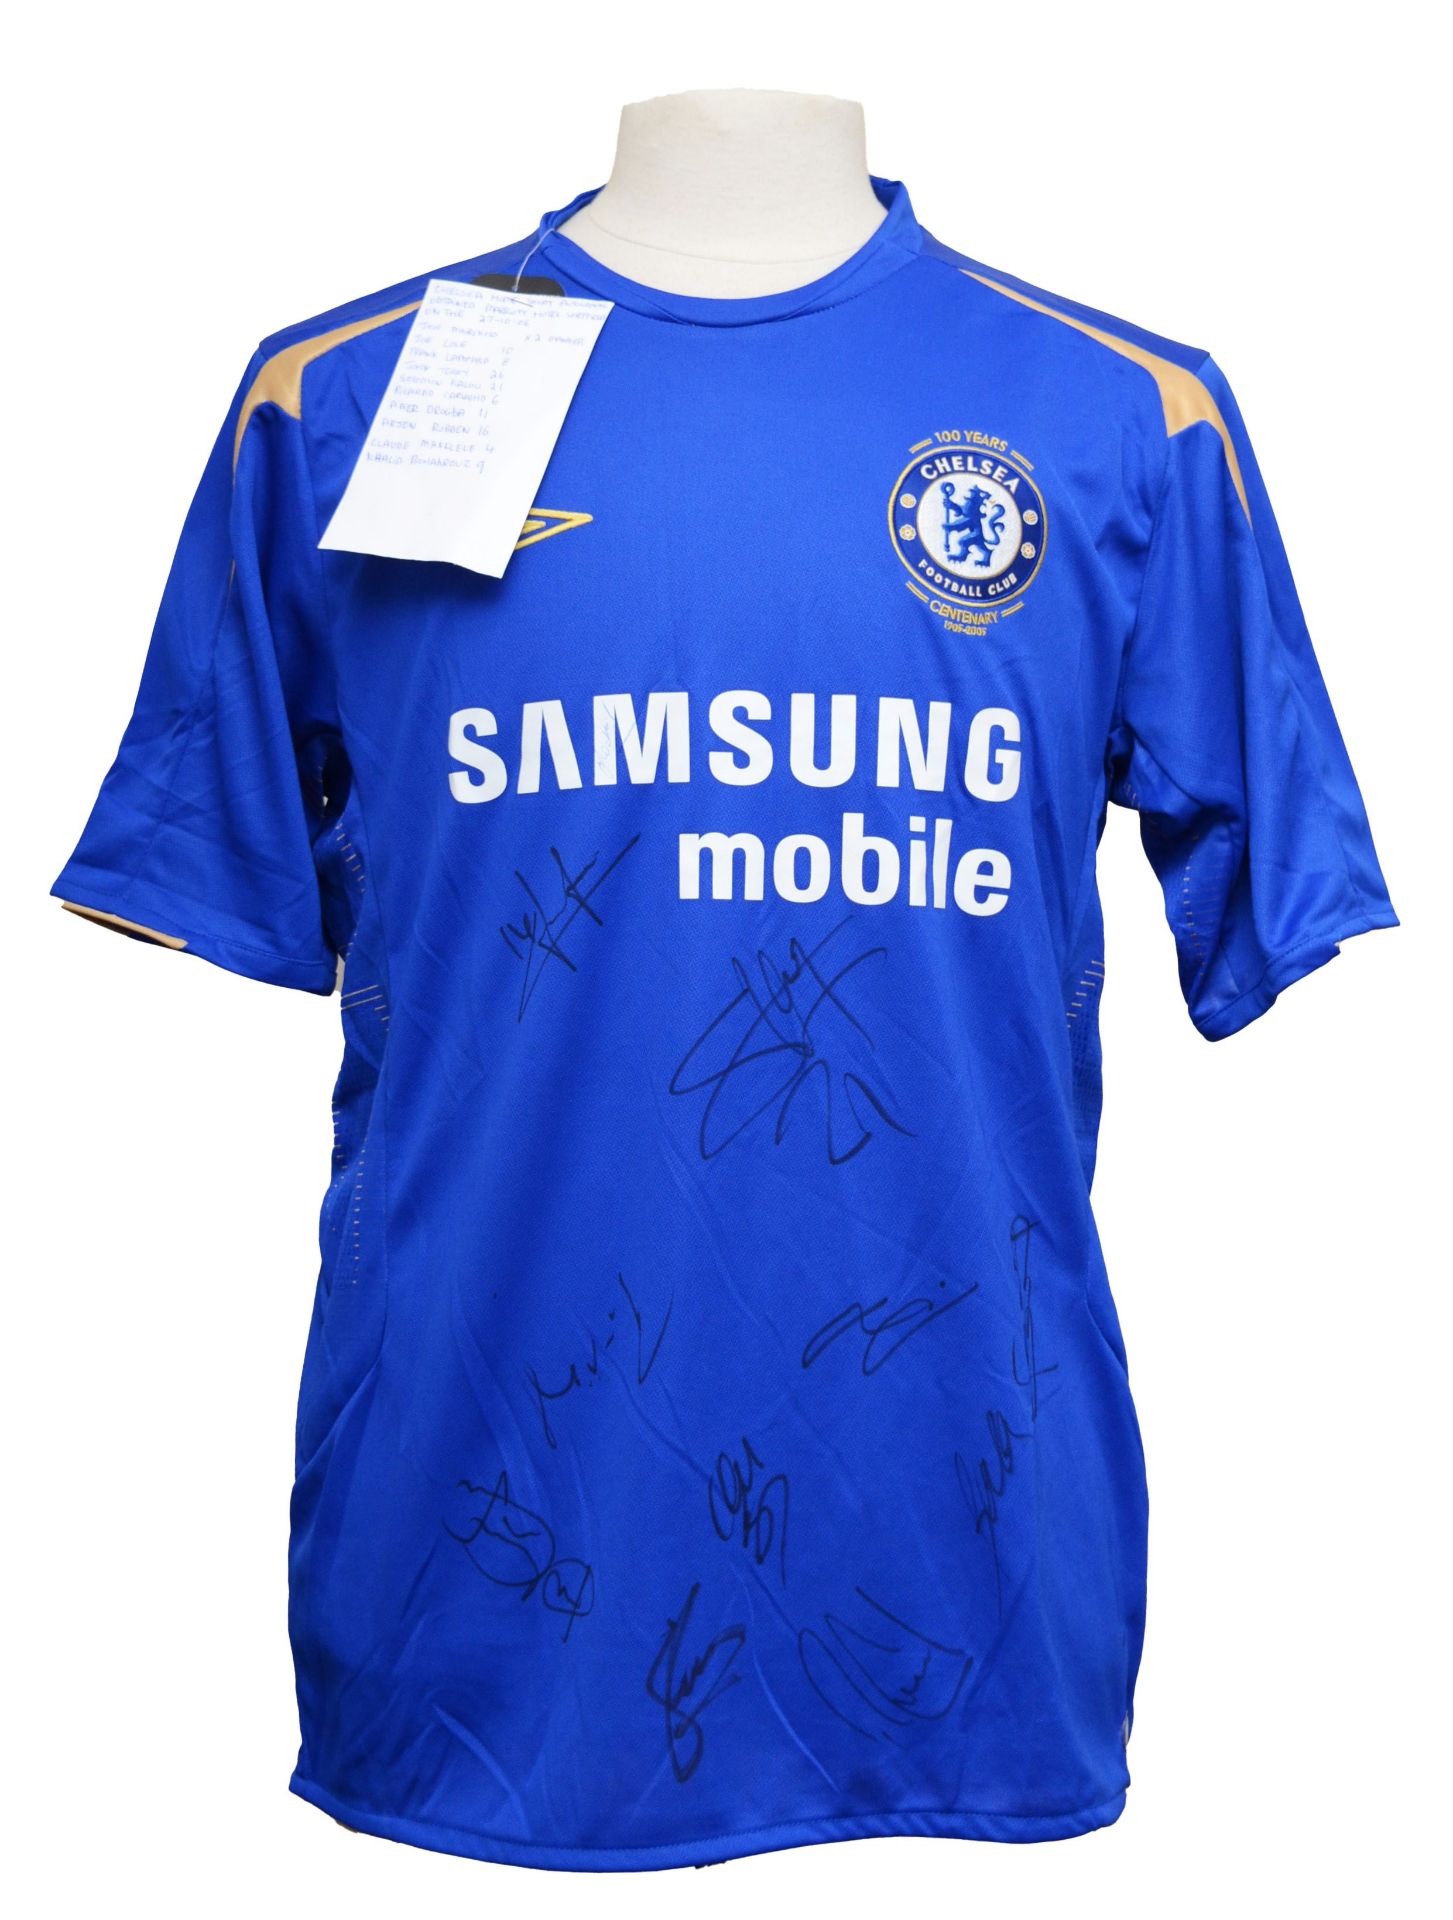 Chelsea Players Signed Shirt 2005-2006 Large Centenary Premier League winning season Jose Mourinho